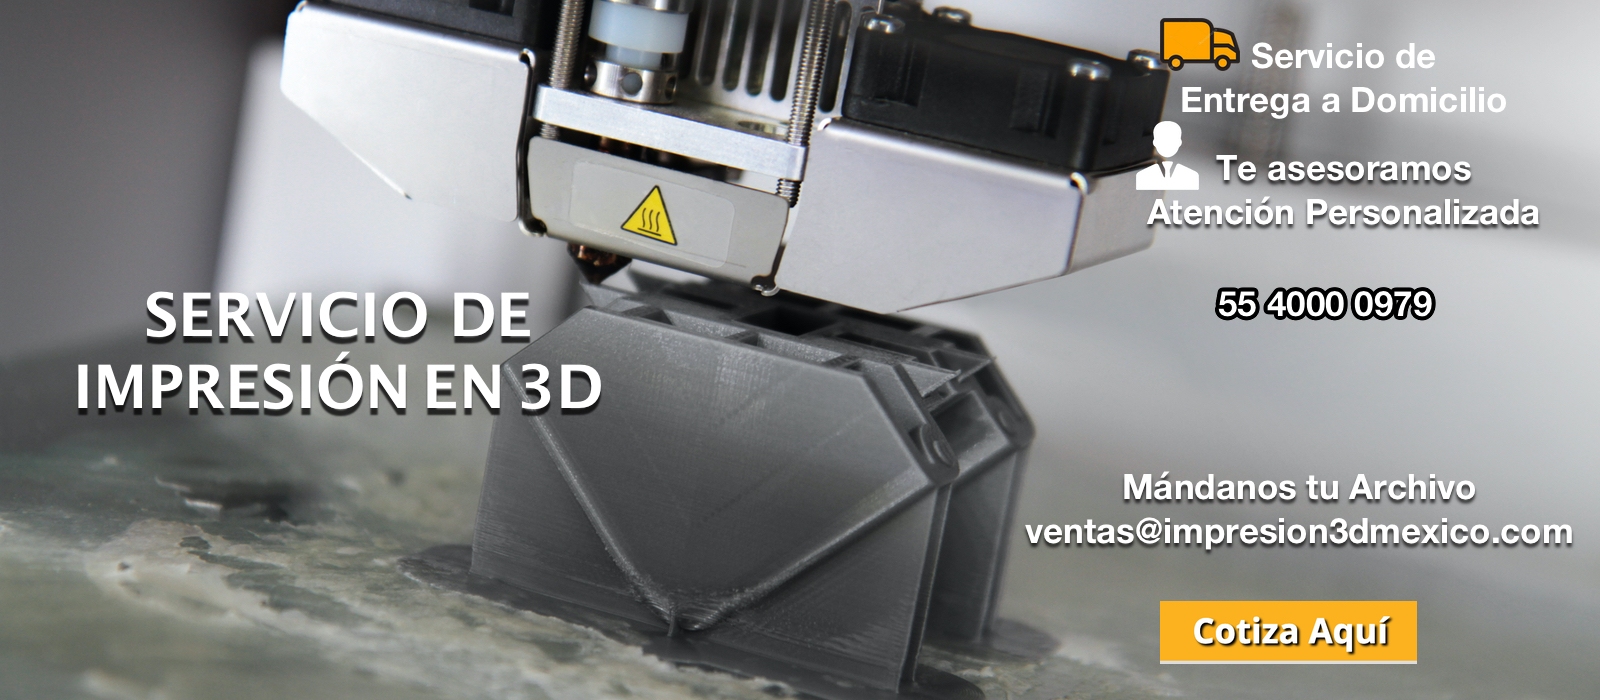 Servicio de Impresión en 3D